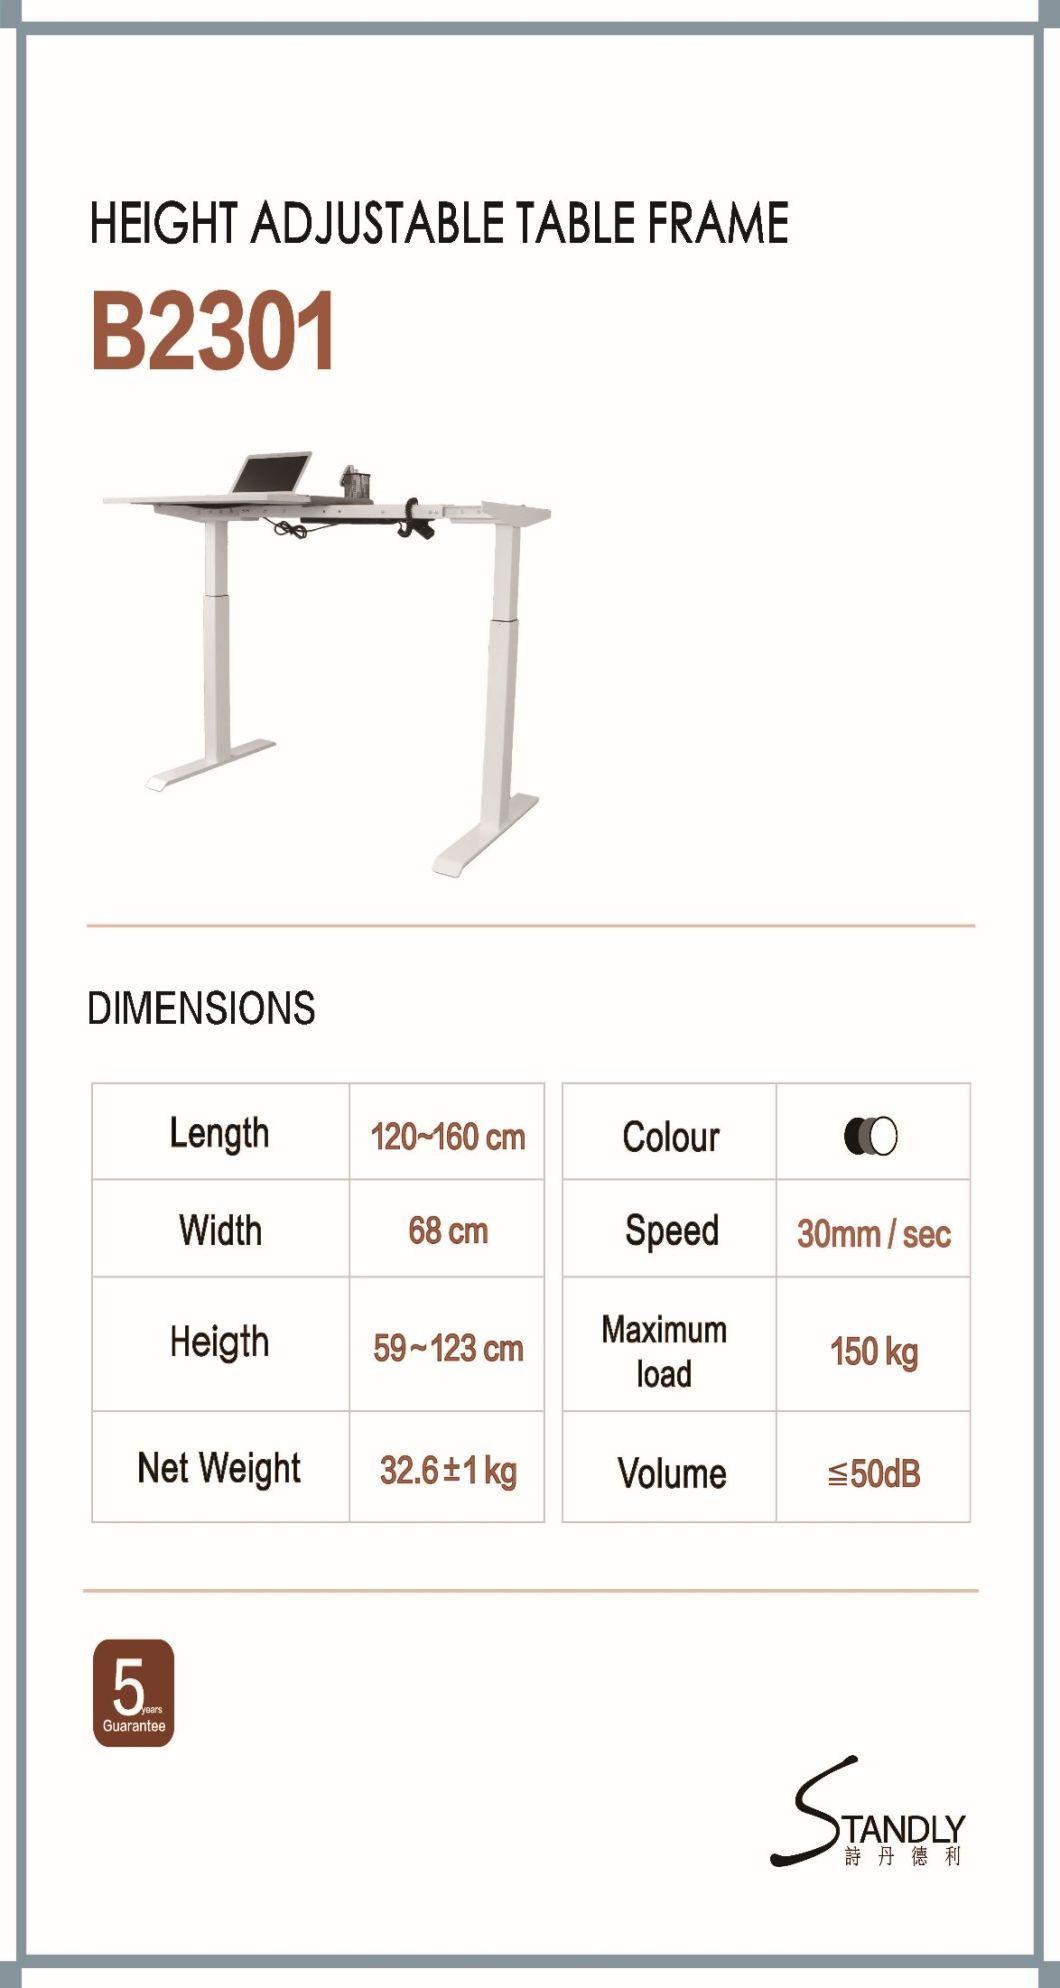 Electric Lifting Table Desk Standing Desk Intelligent Adjustable Automatic Computer Desk Rack Table Legs